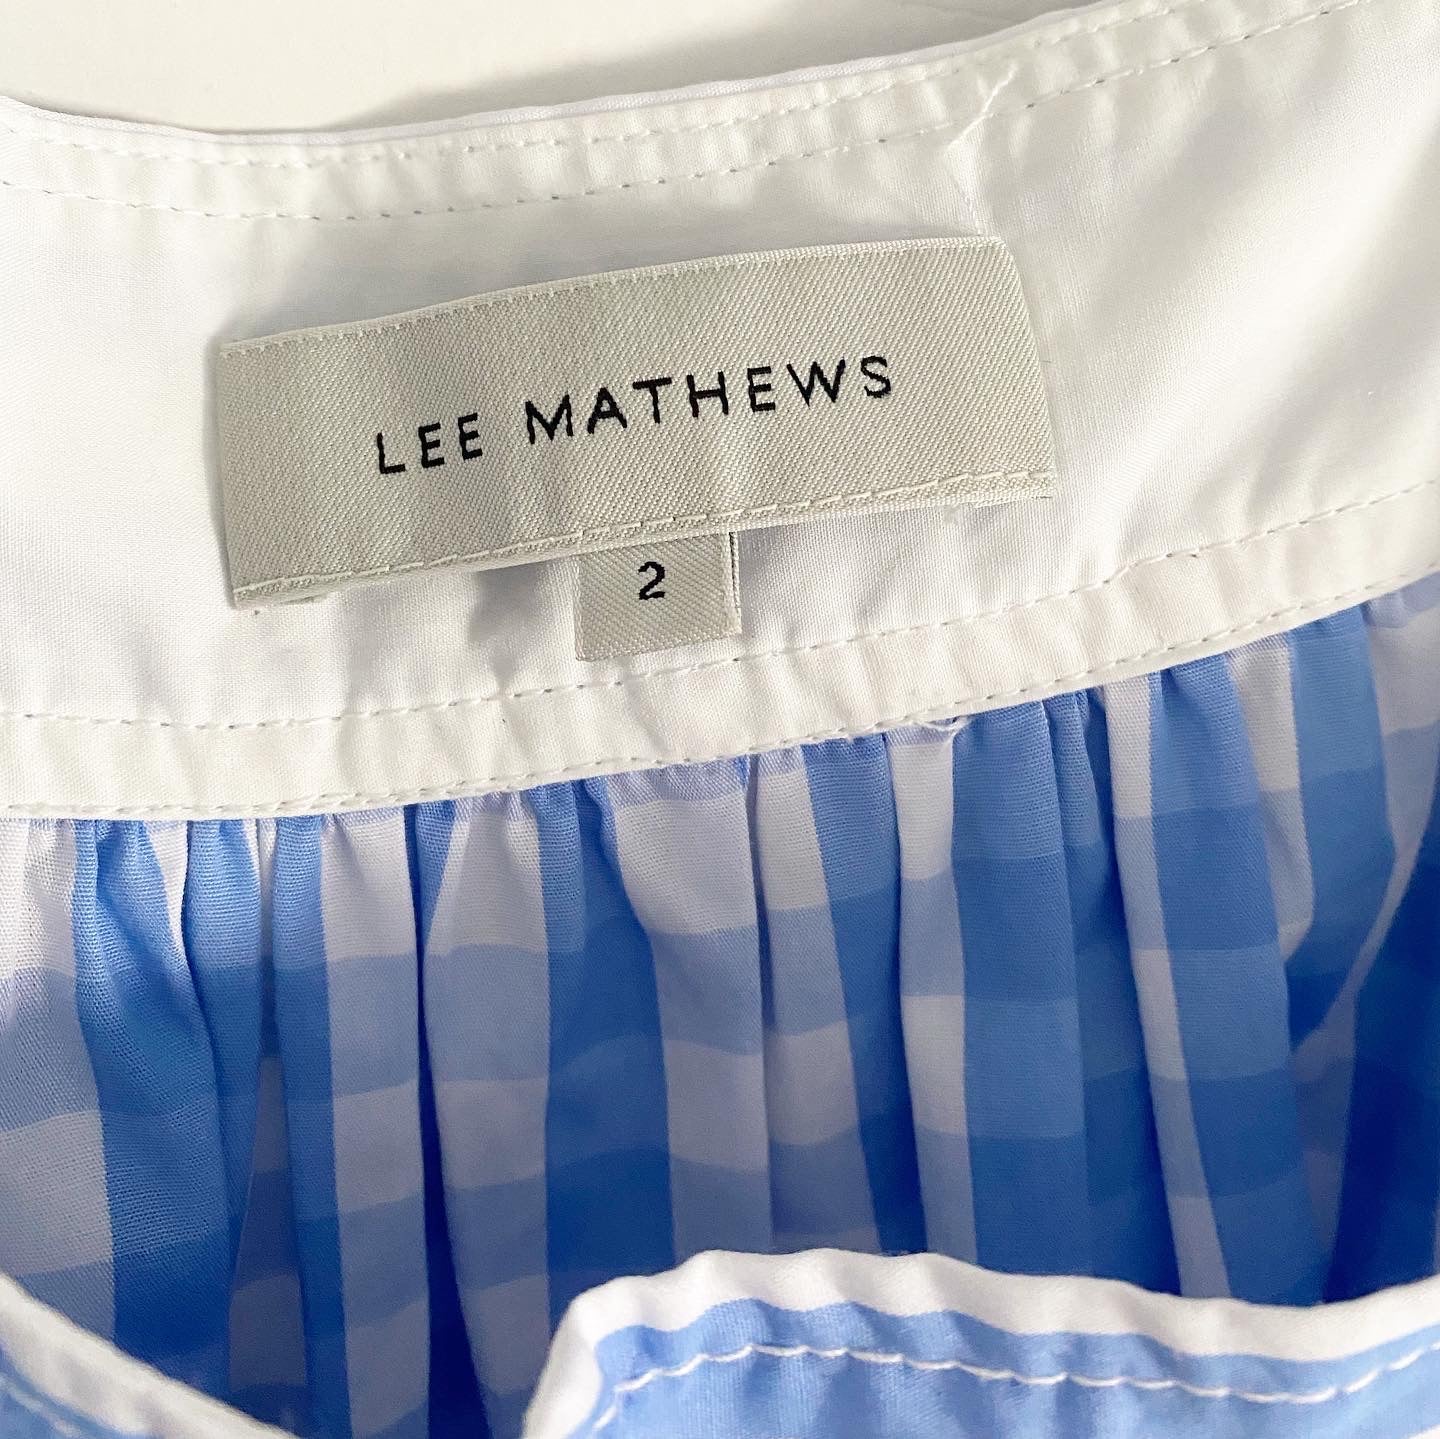 Lee Mathews "Stevie" Puff Sleeve Dress, size "2" aka Size Medium